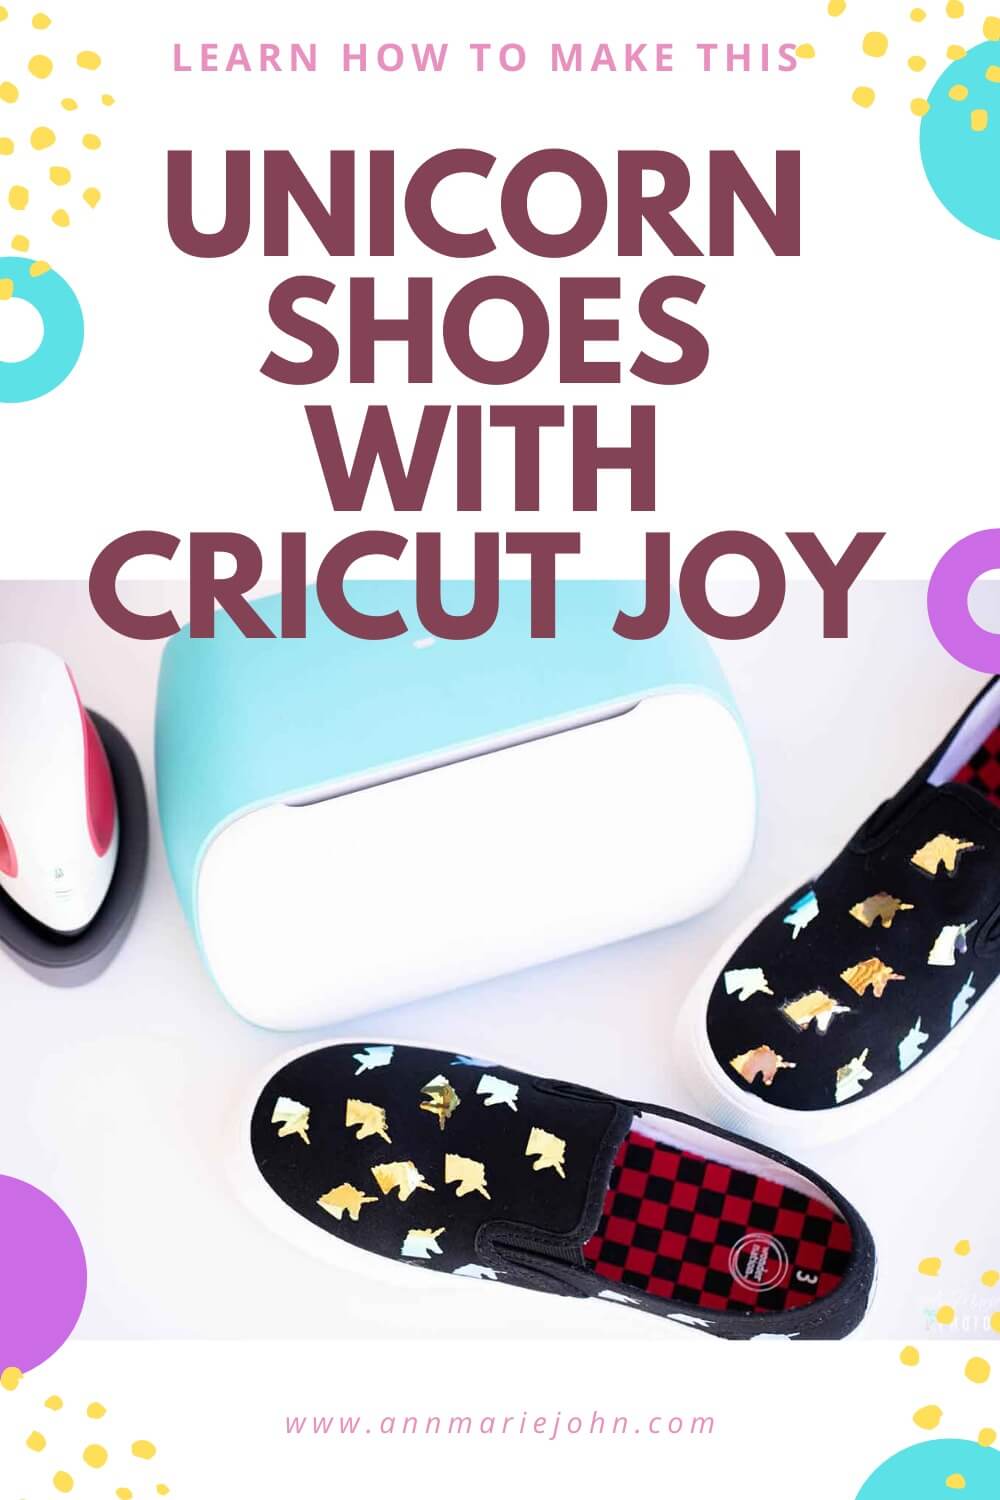 Unicorn Shoes with the Cricut Joy and EasyPress Mini.